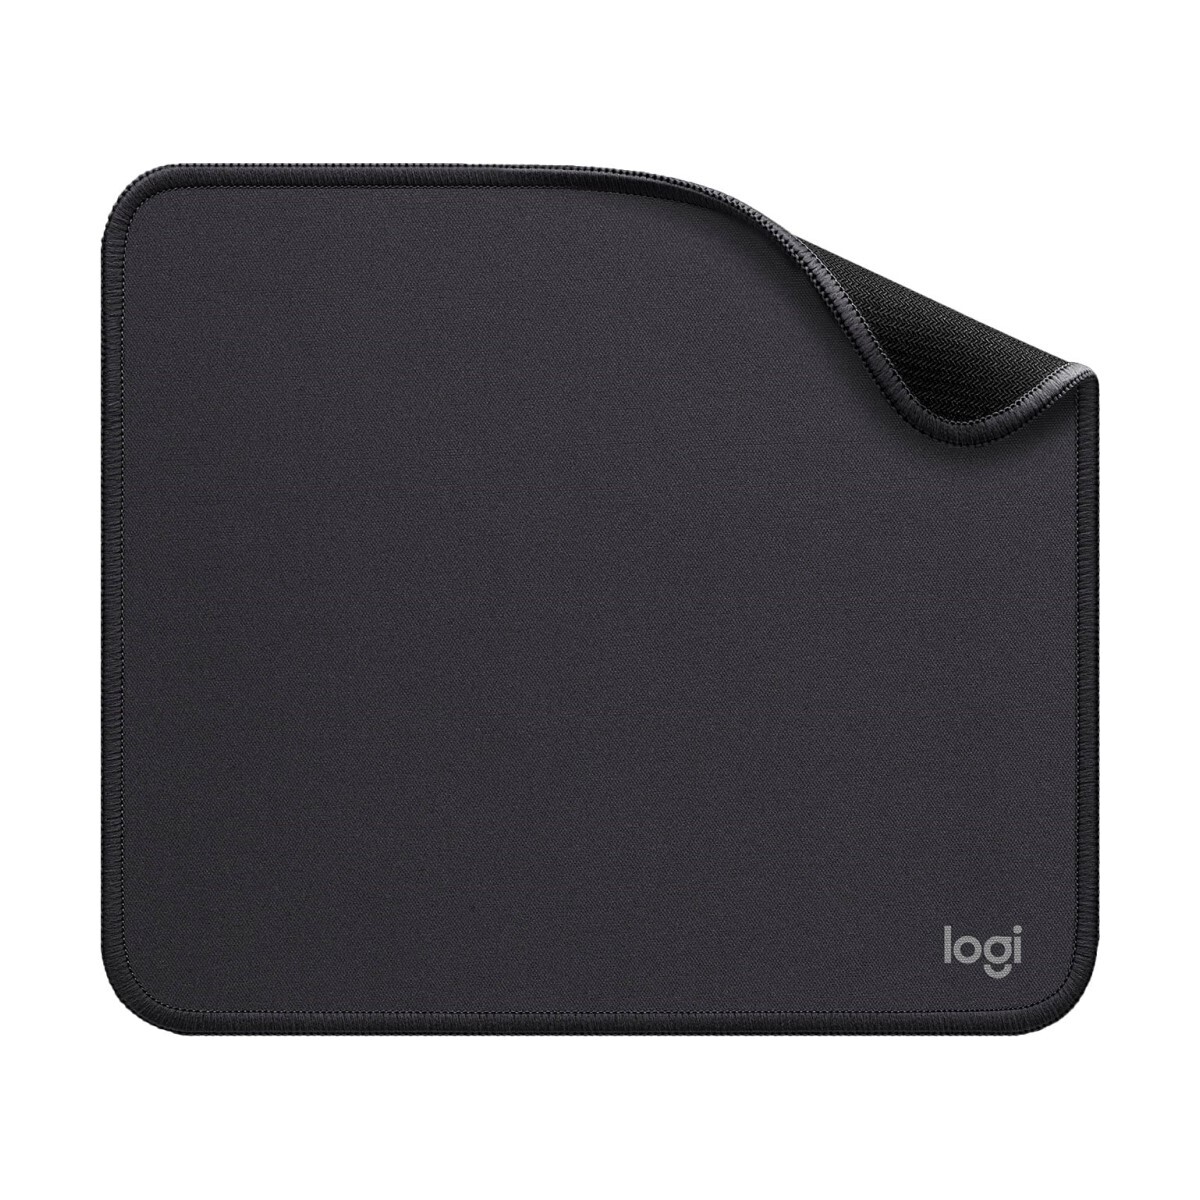 Mouse pad logitech - 200 x 230 - Negro 